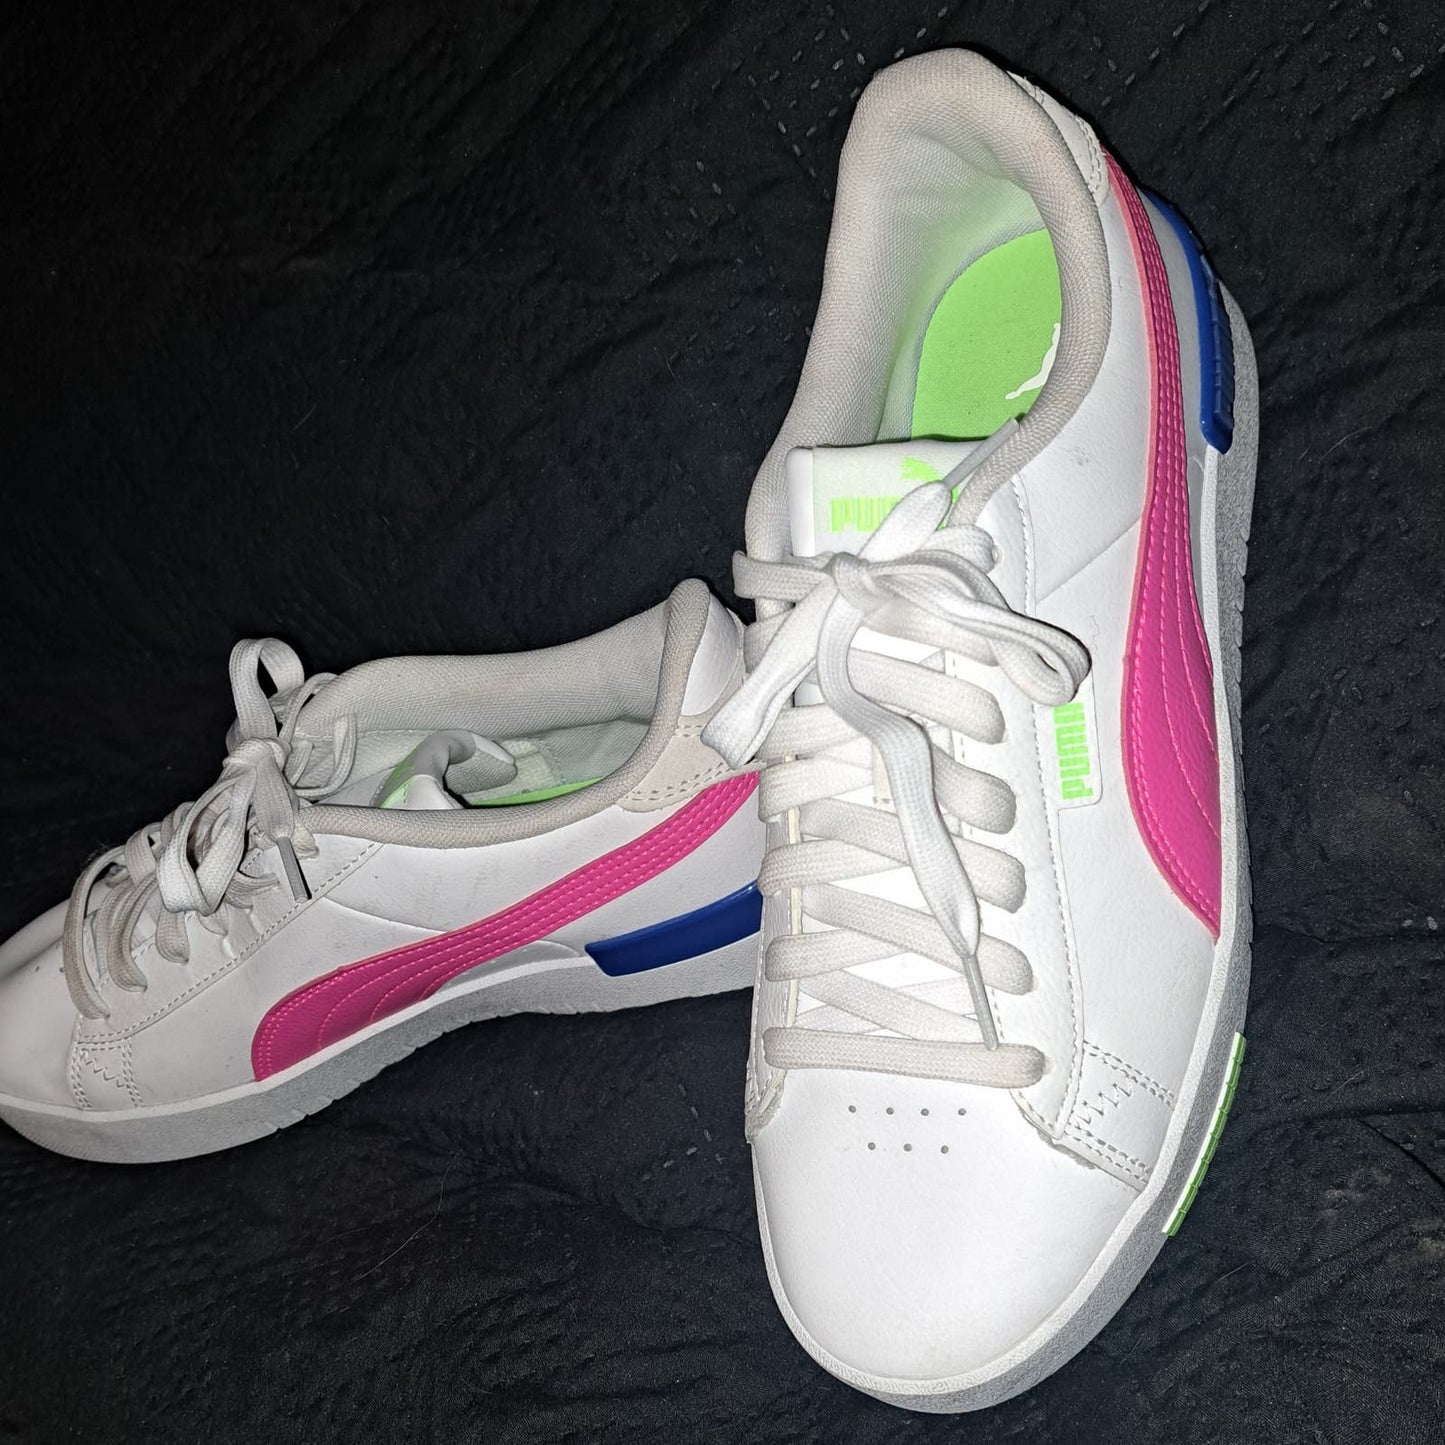 NEW- LEATHER PUMA fashion platform sneaker tennis shoes neon size 9.5 SOFTFOAM